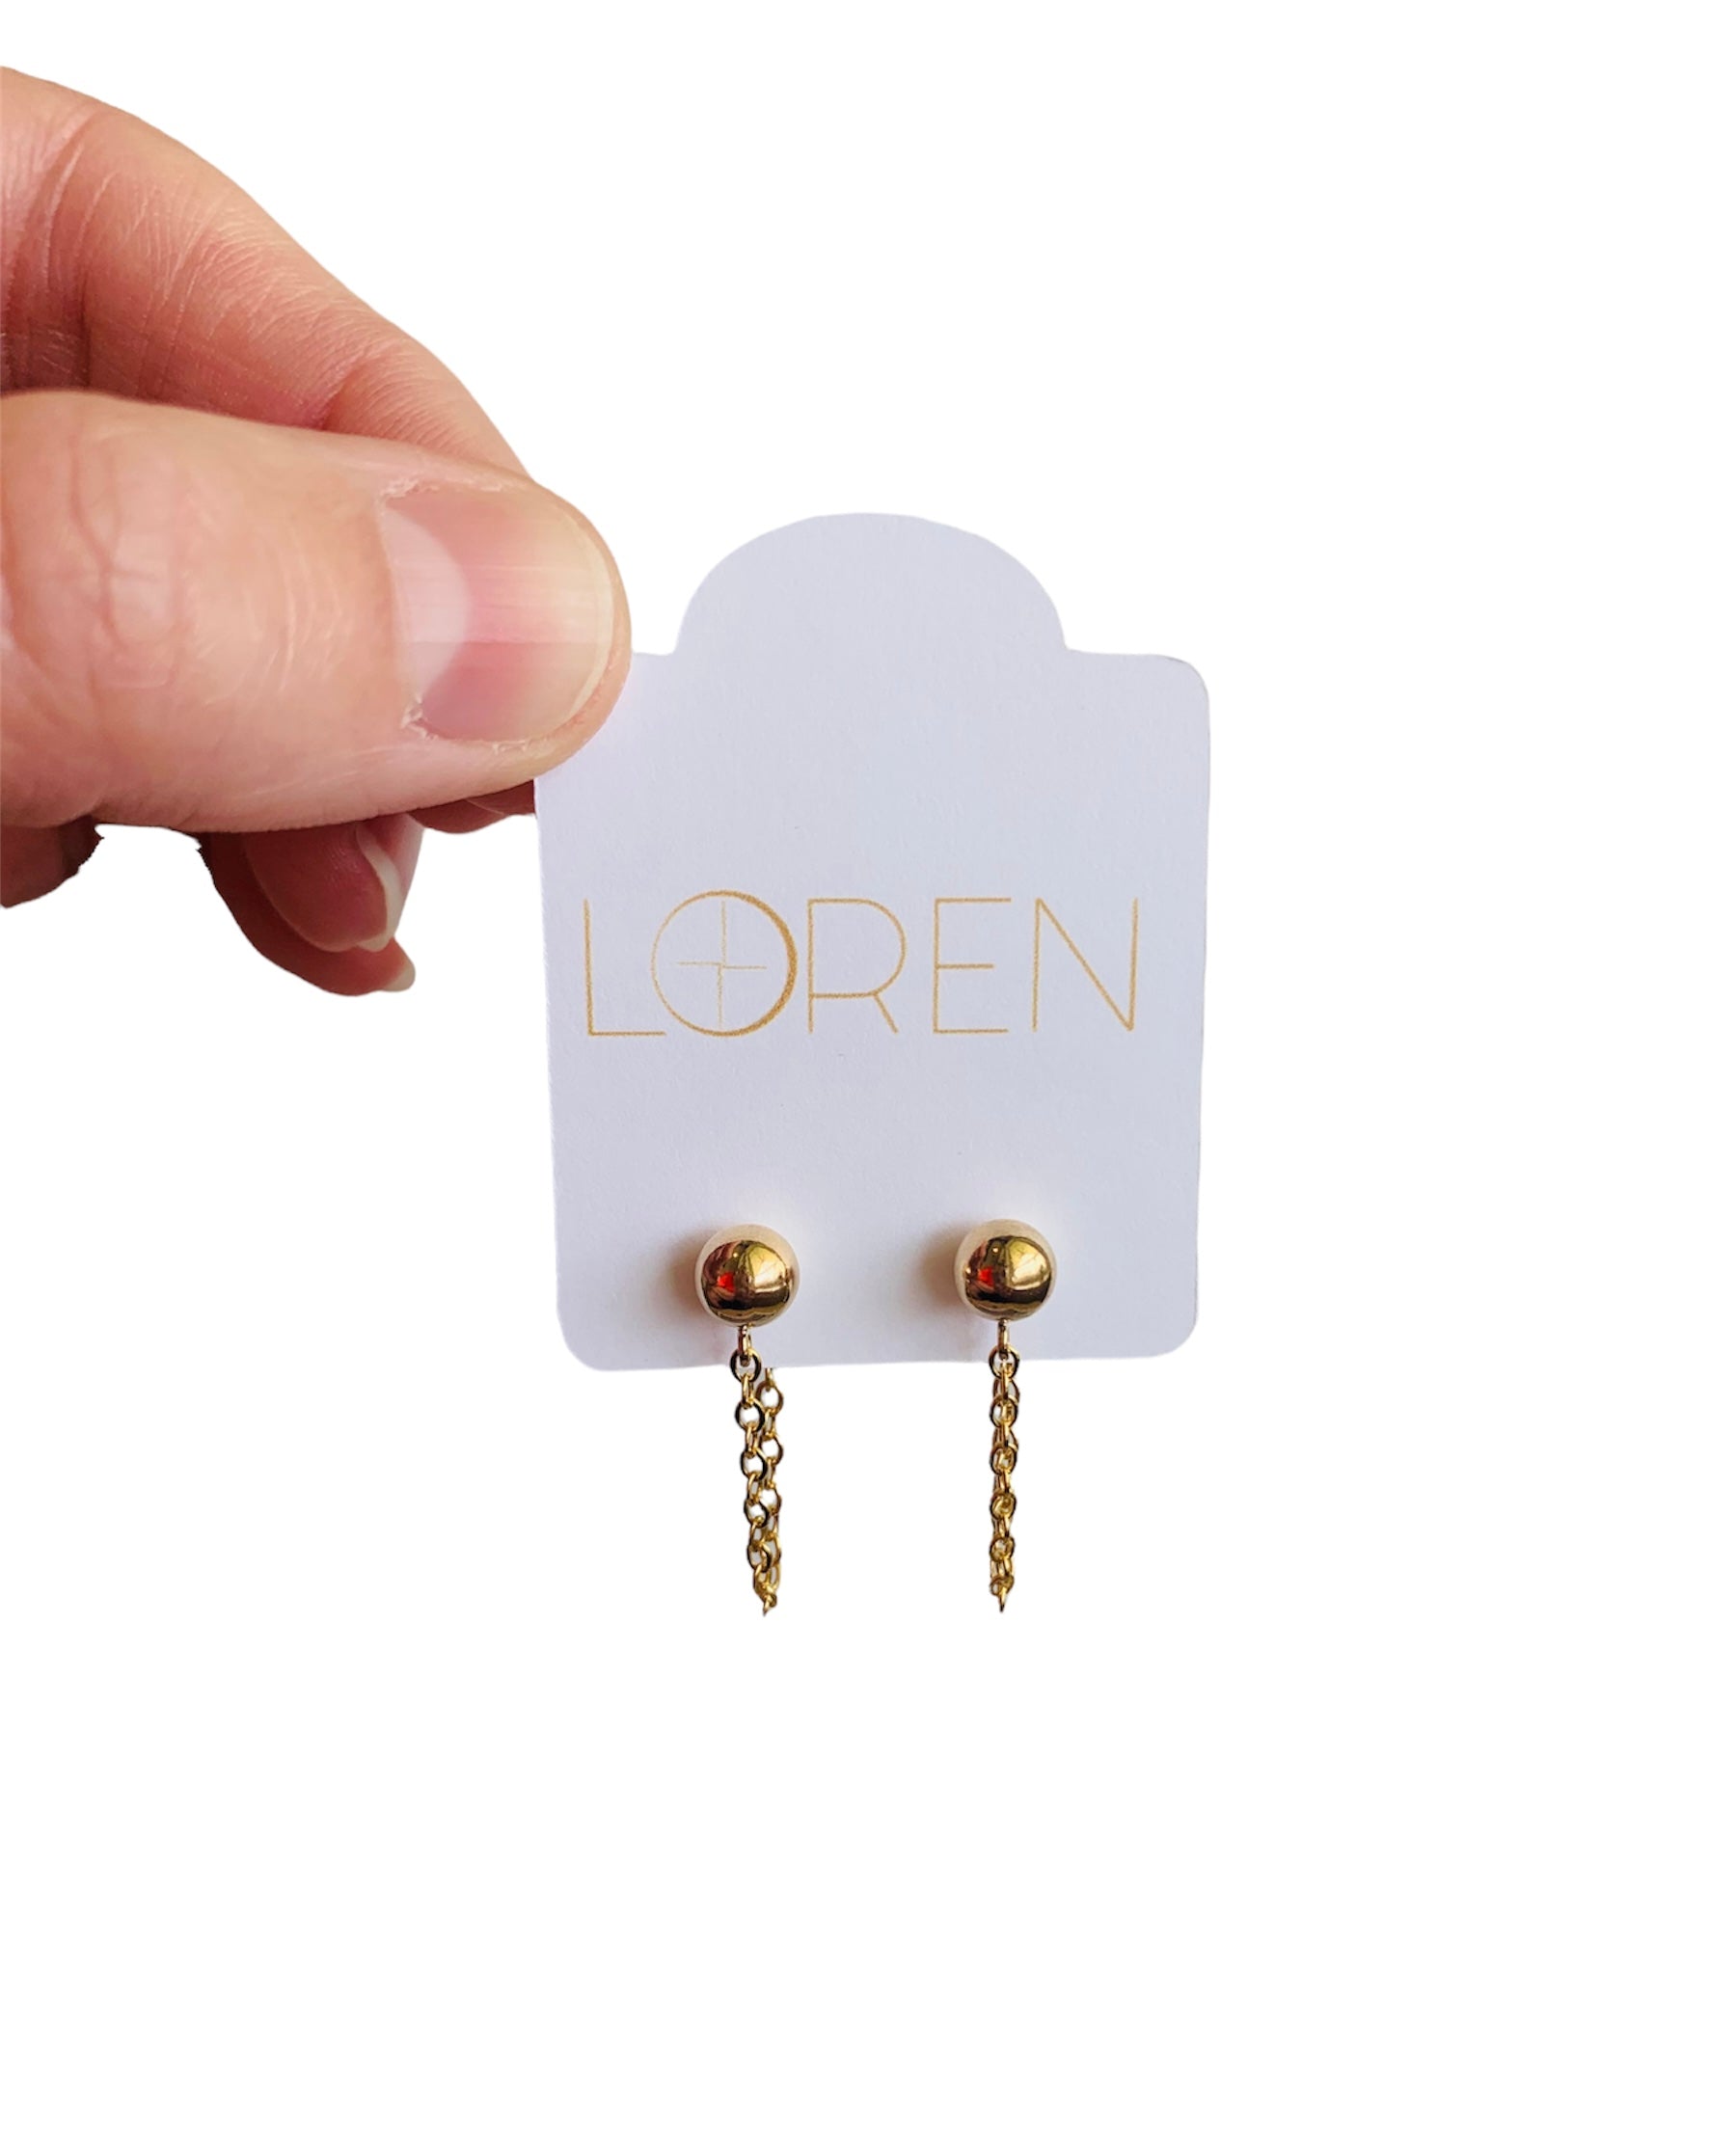 Medium Gold Ball and Chain Earrings | LOREN